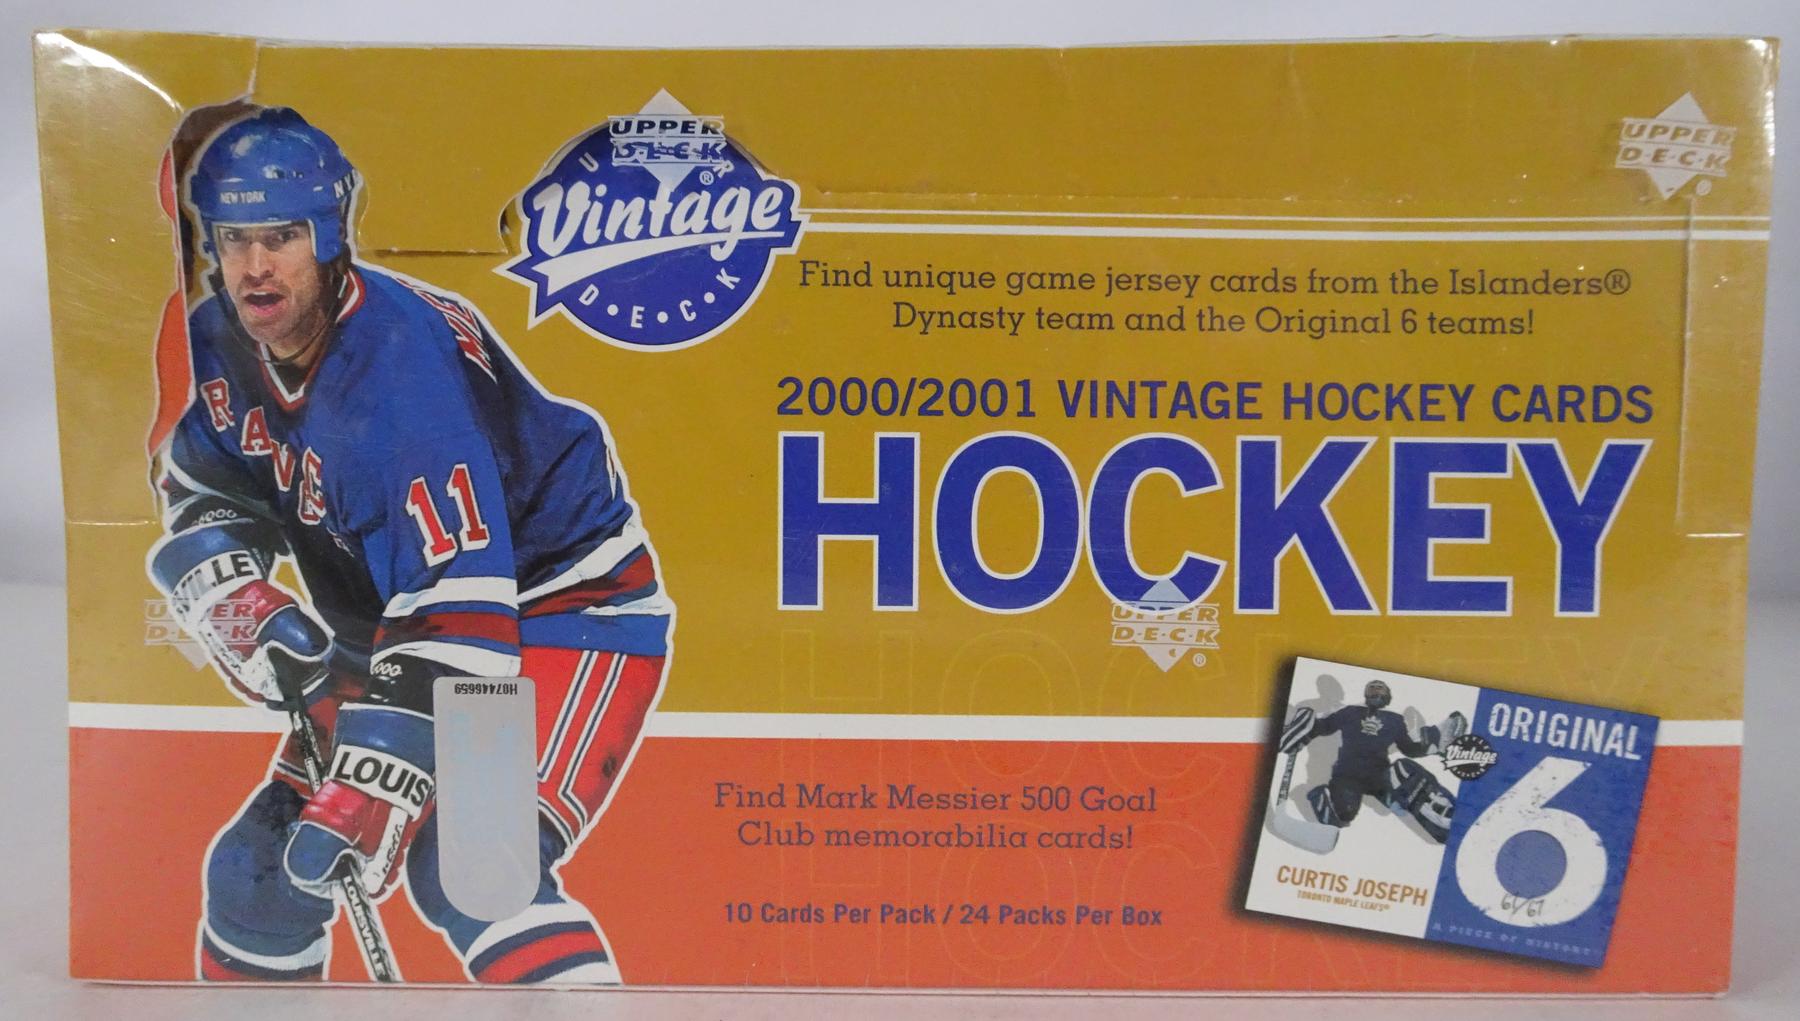 Marian Gaborik NHL Original Autographed Items for sale